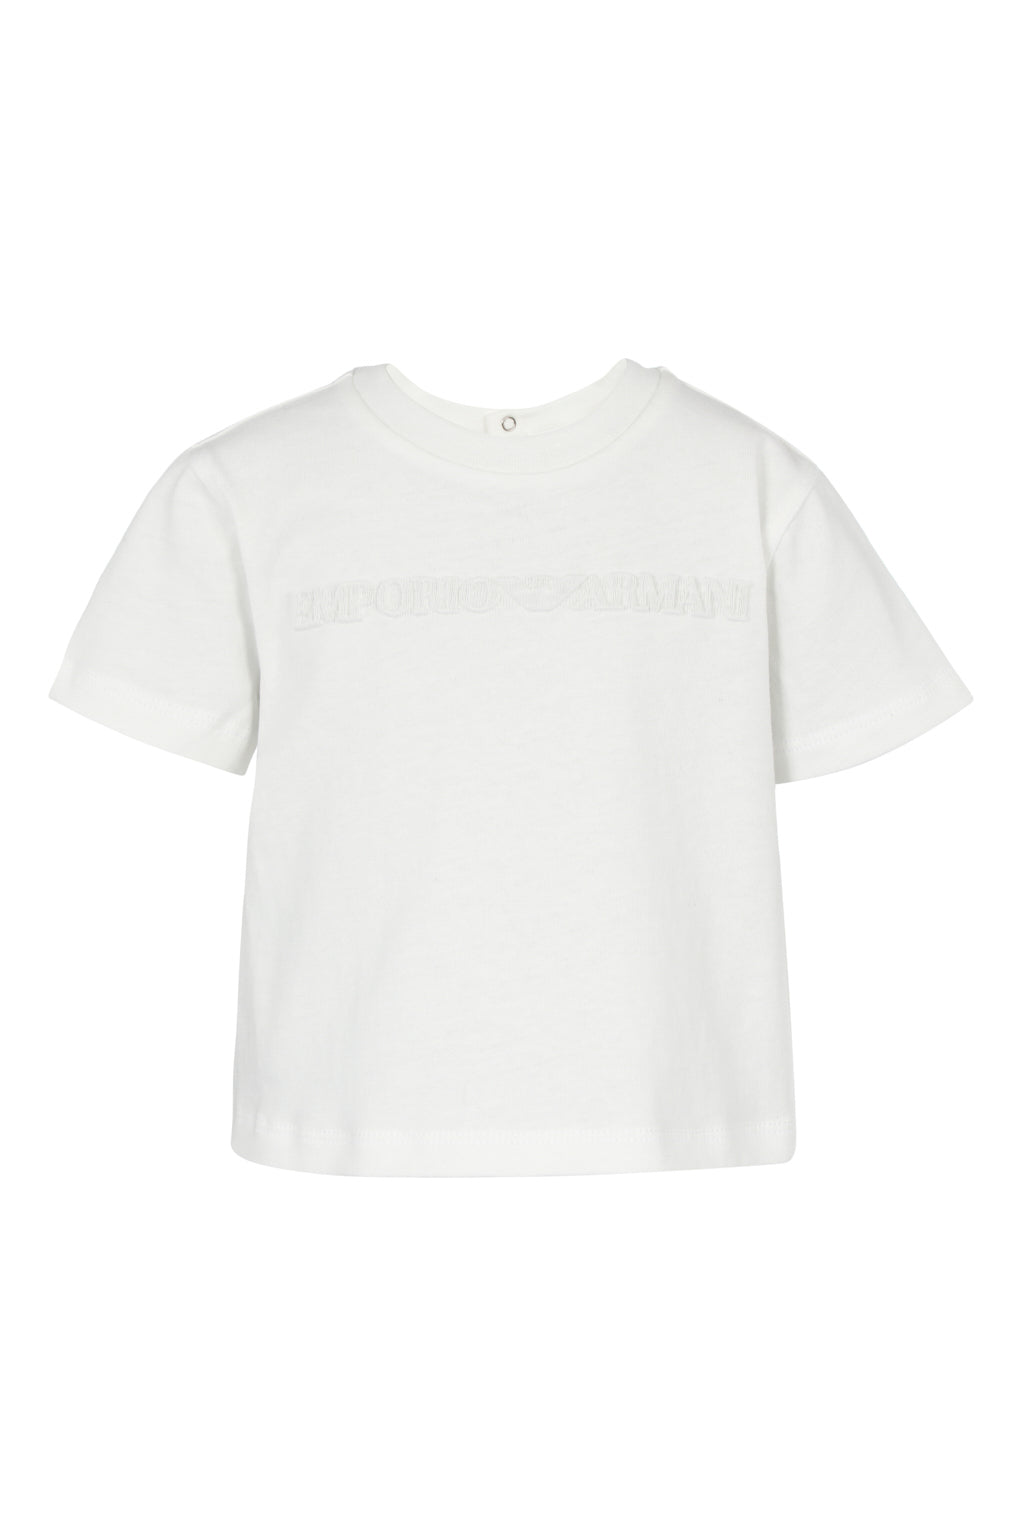 Emporio Armani T-Shirt Style:3Rhtjm